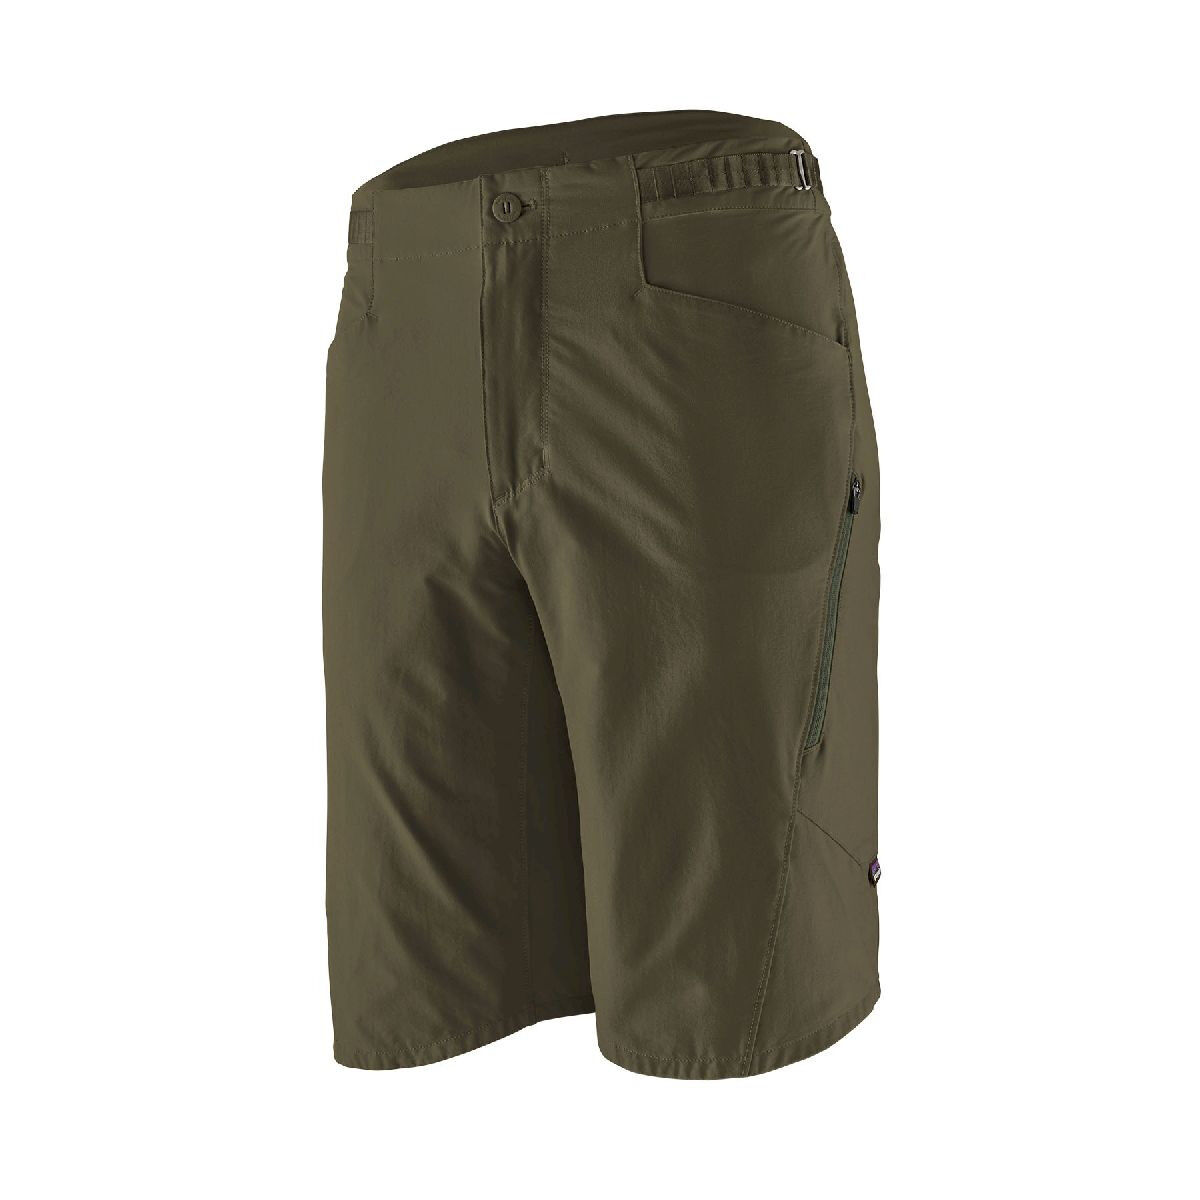 Patagonia Dirt Craft Bike Shorts - MTB shorts - Men's